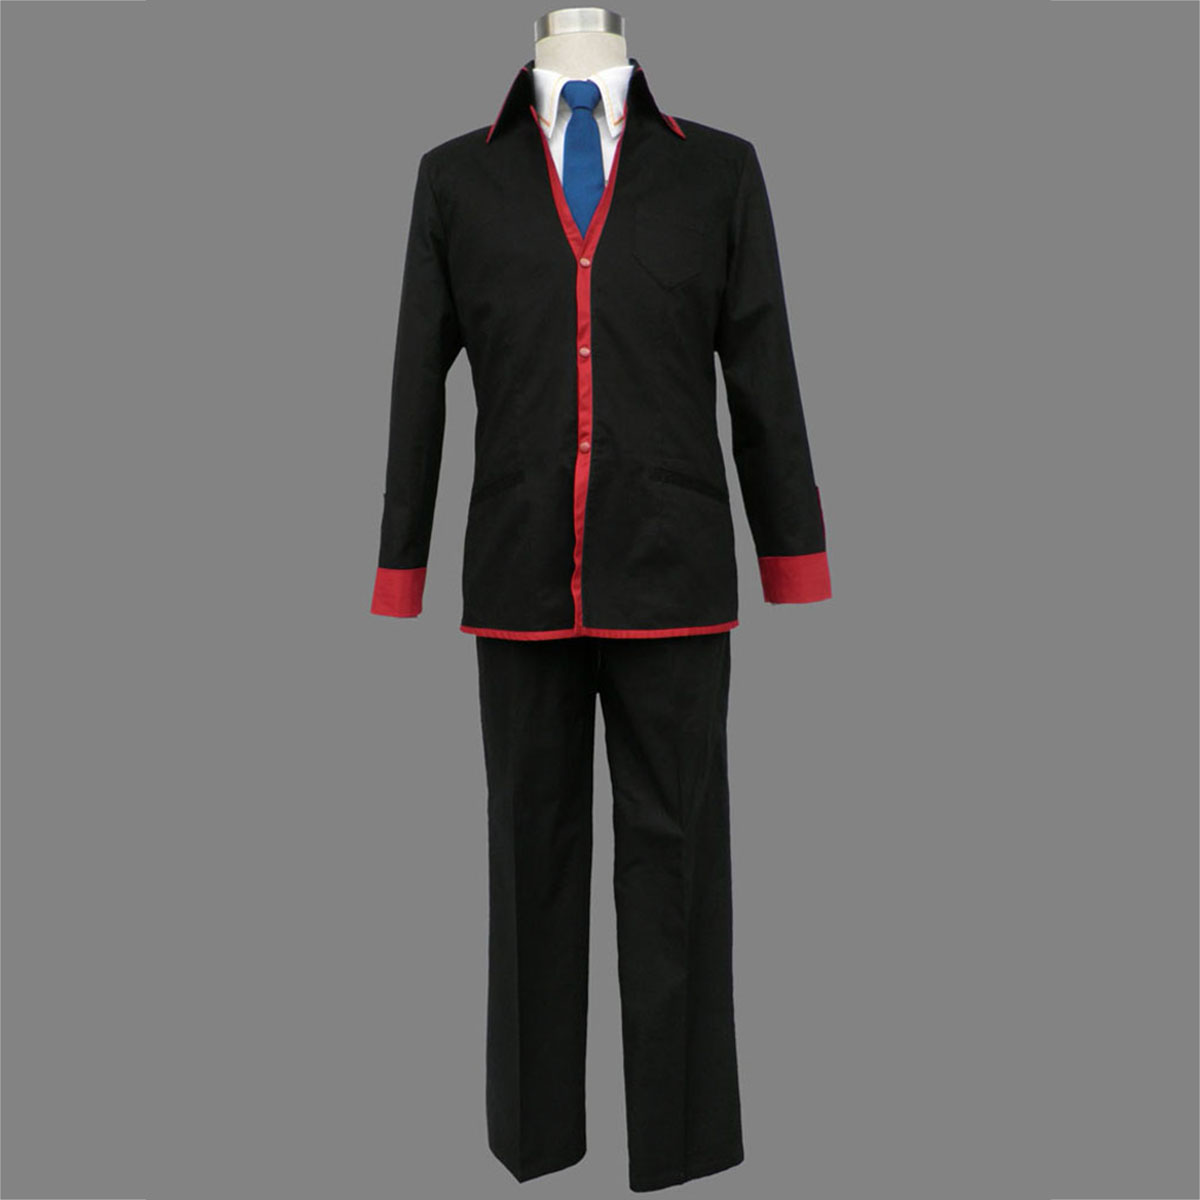 Little Busters Male School Uniform Cosplay Costumes AU